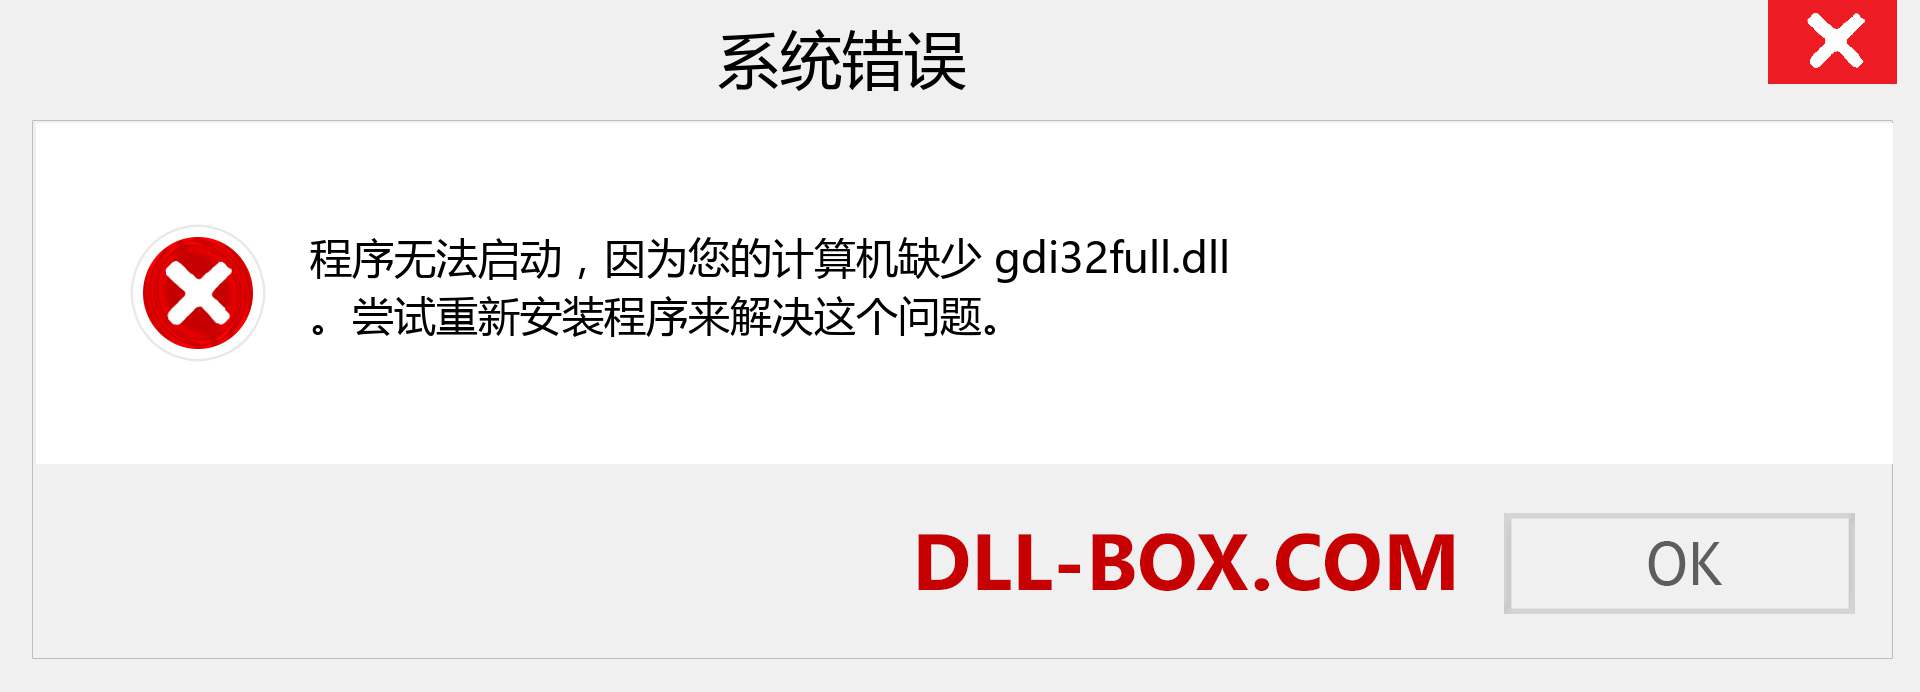 gdi32full.dll 文件丢失？。 适用于 Windows 7、8、10 的下载 - 修复 Windows、照片、图像上的 gdi32full dll 丢失错误